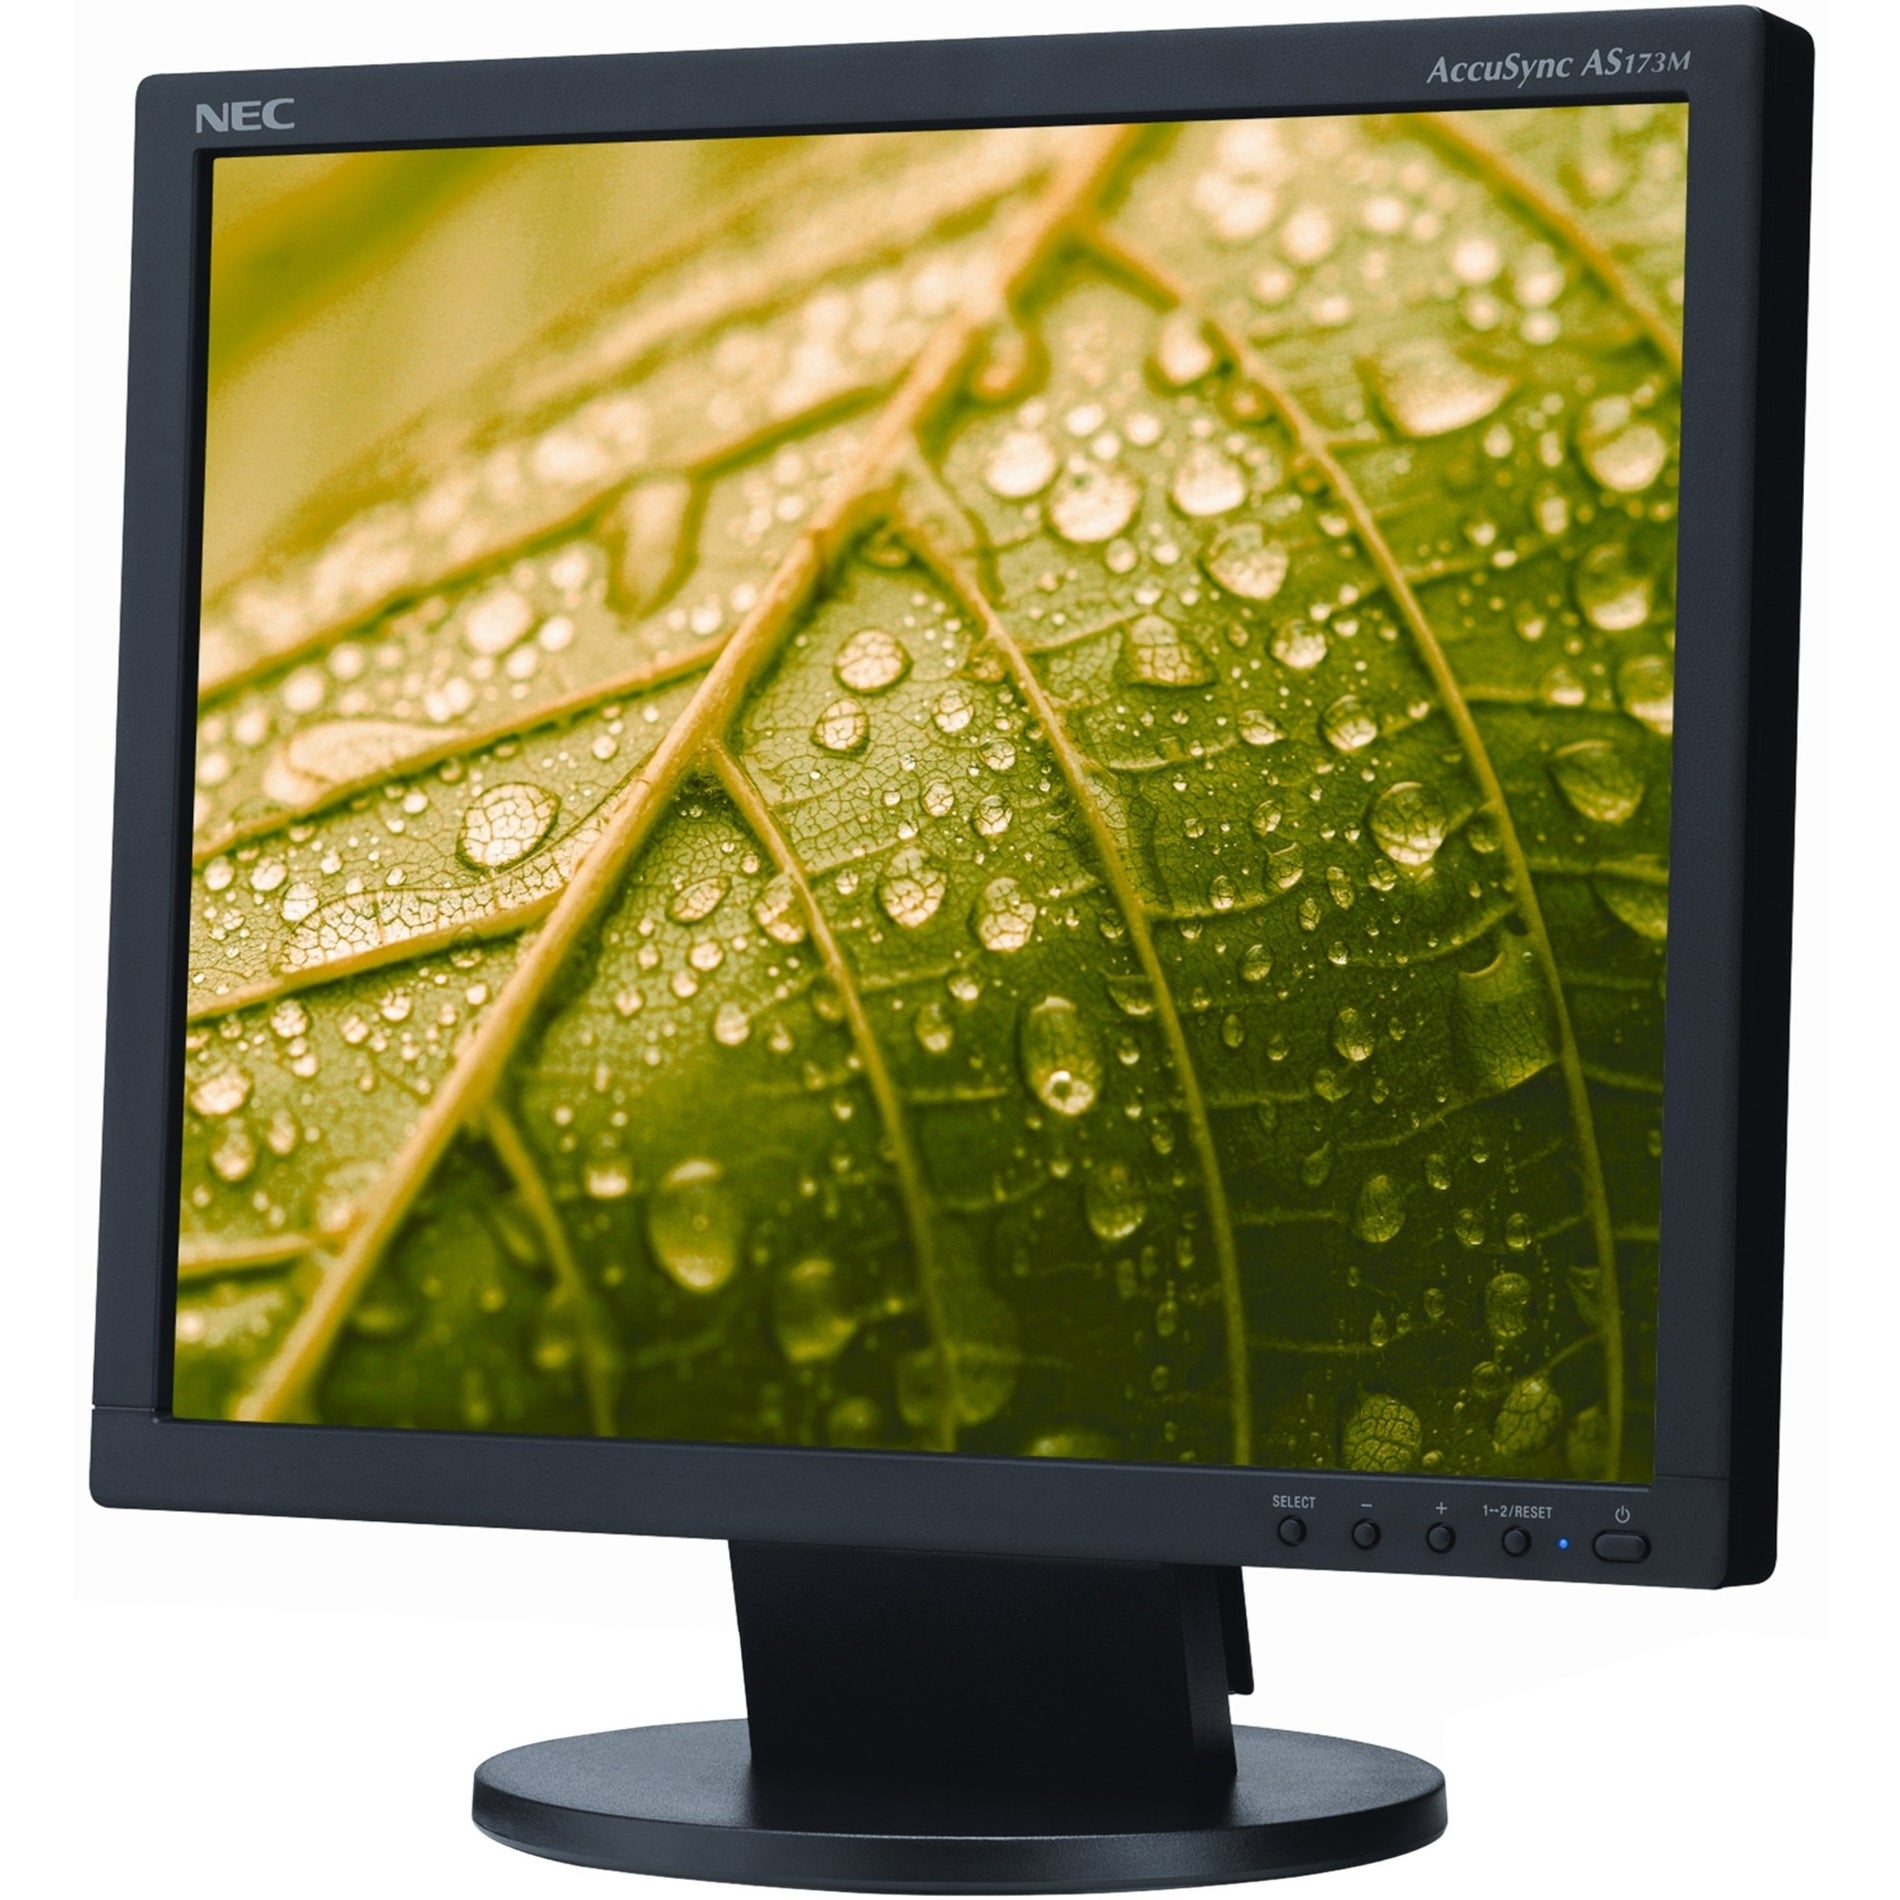 NEC Display AS173M-BK AccuSync 17" LCD Monitor, LED Backlighting, 1280 x 1024, 5:4